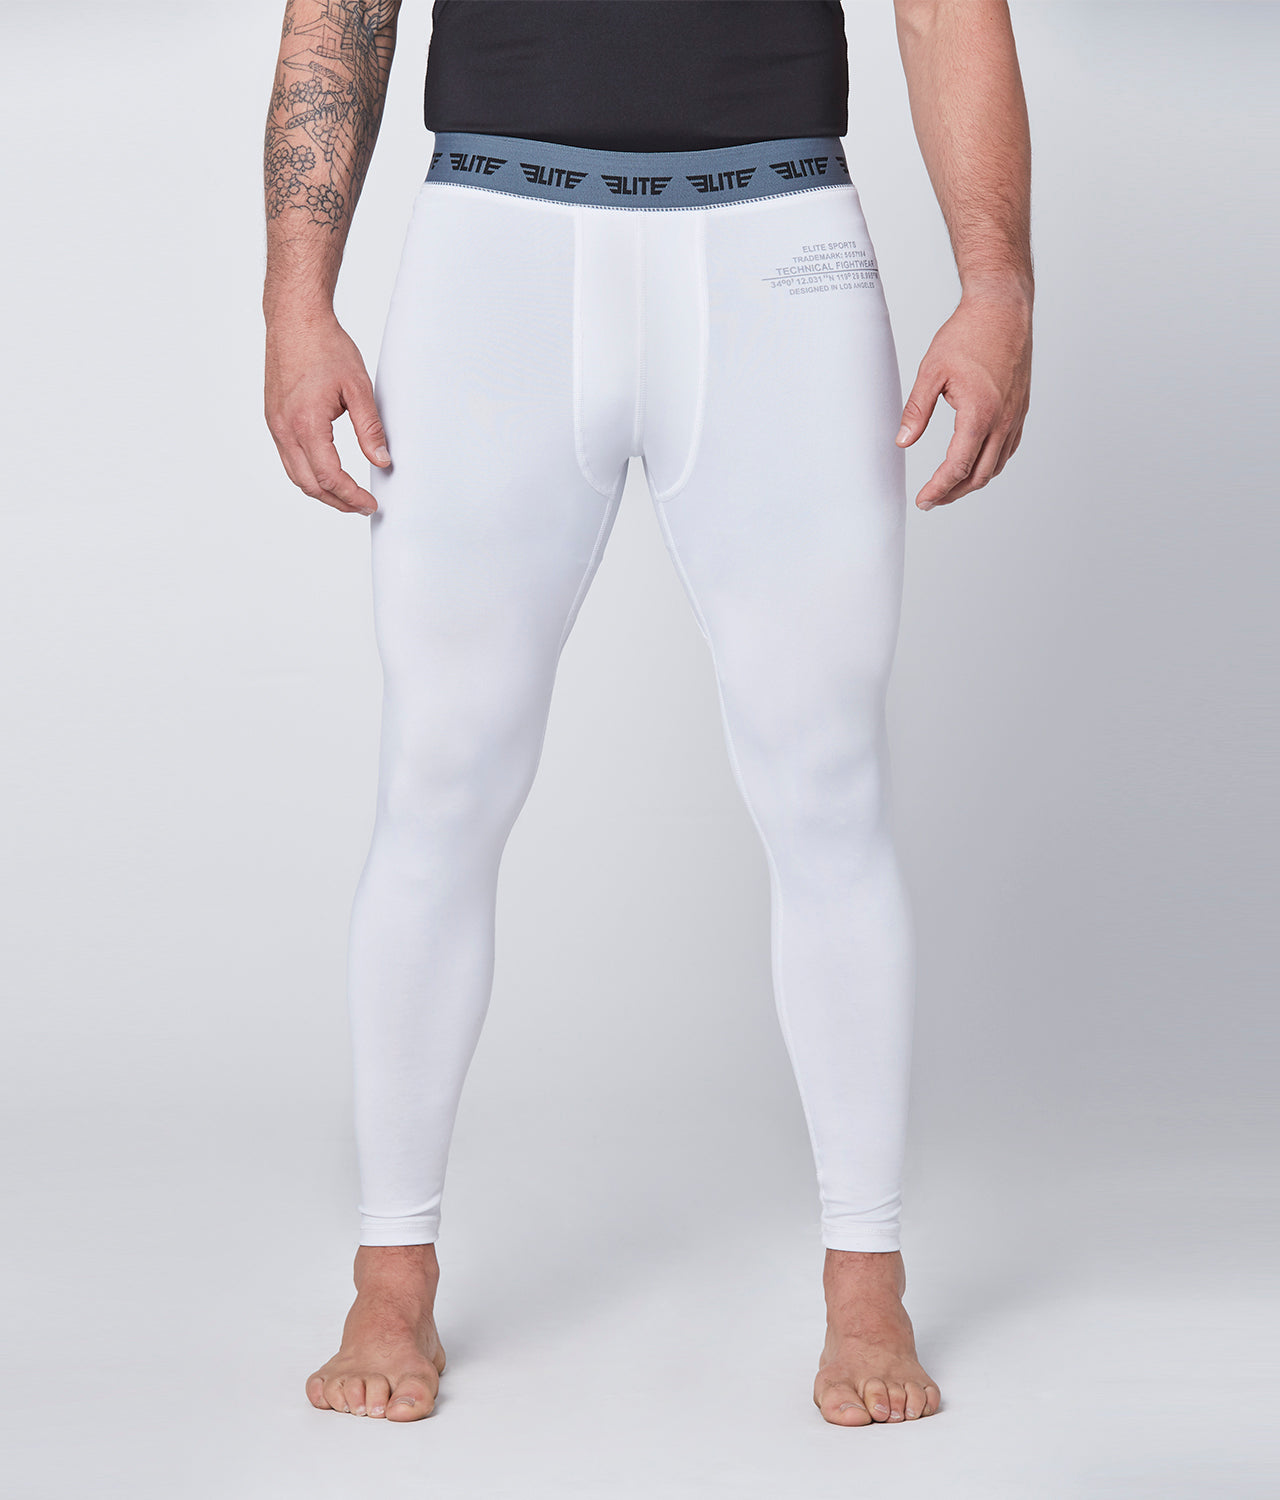 Men's Plain White Compression Boxing Spat Pants